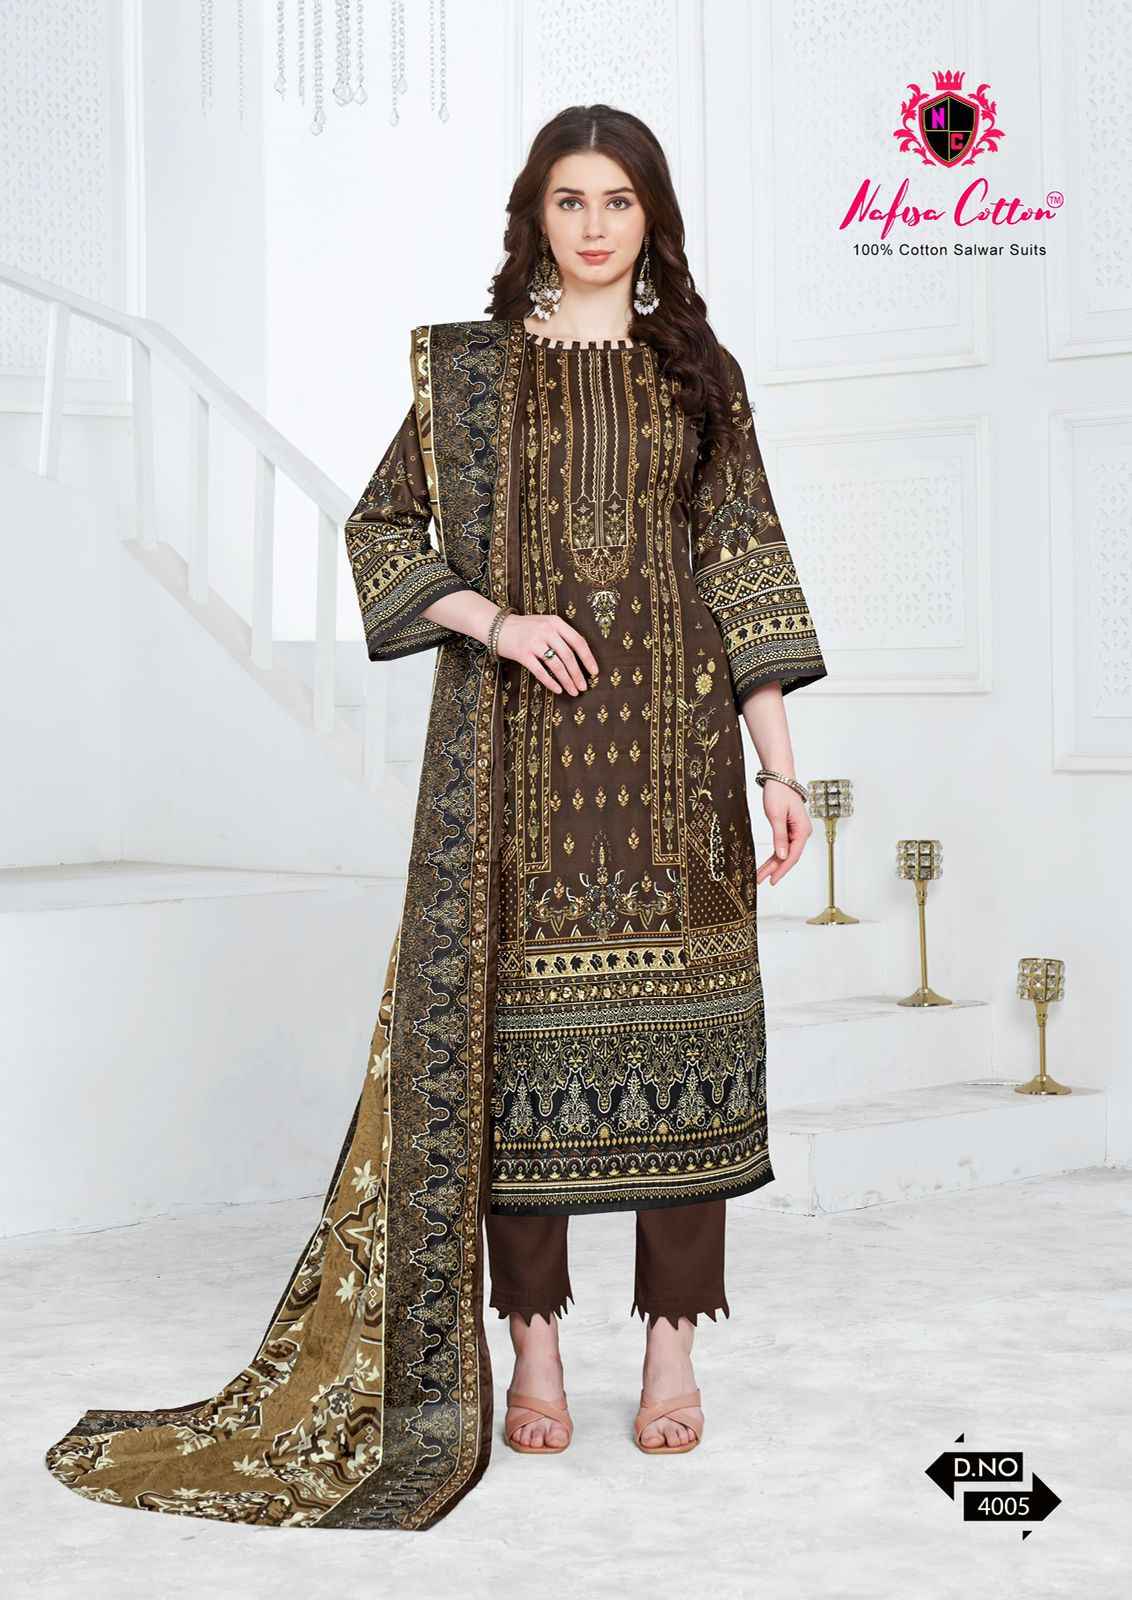 Nafisa Cotton Andaaz Karachi Suit Vol-4 Cotton Dress Material (6 Pc Catalog)